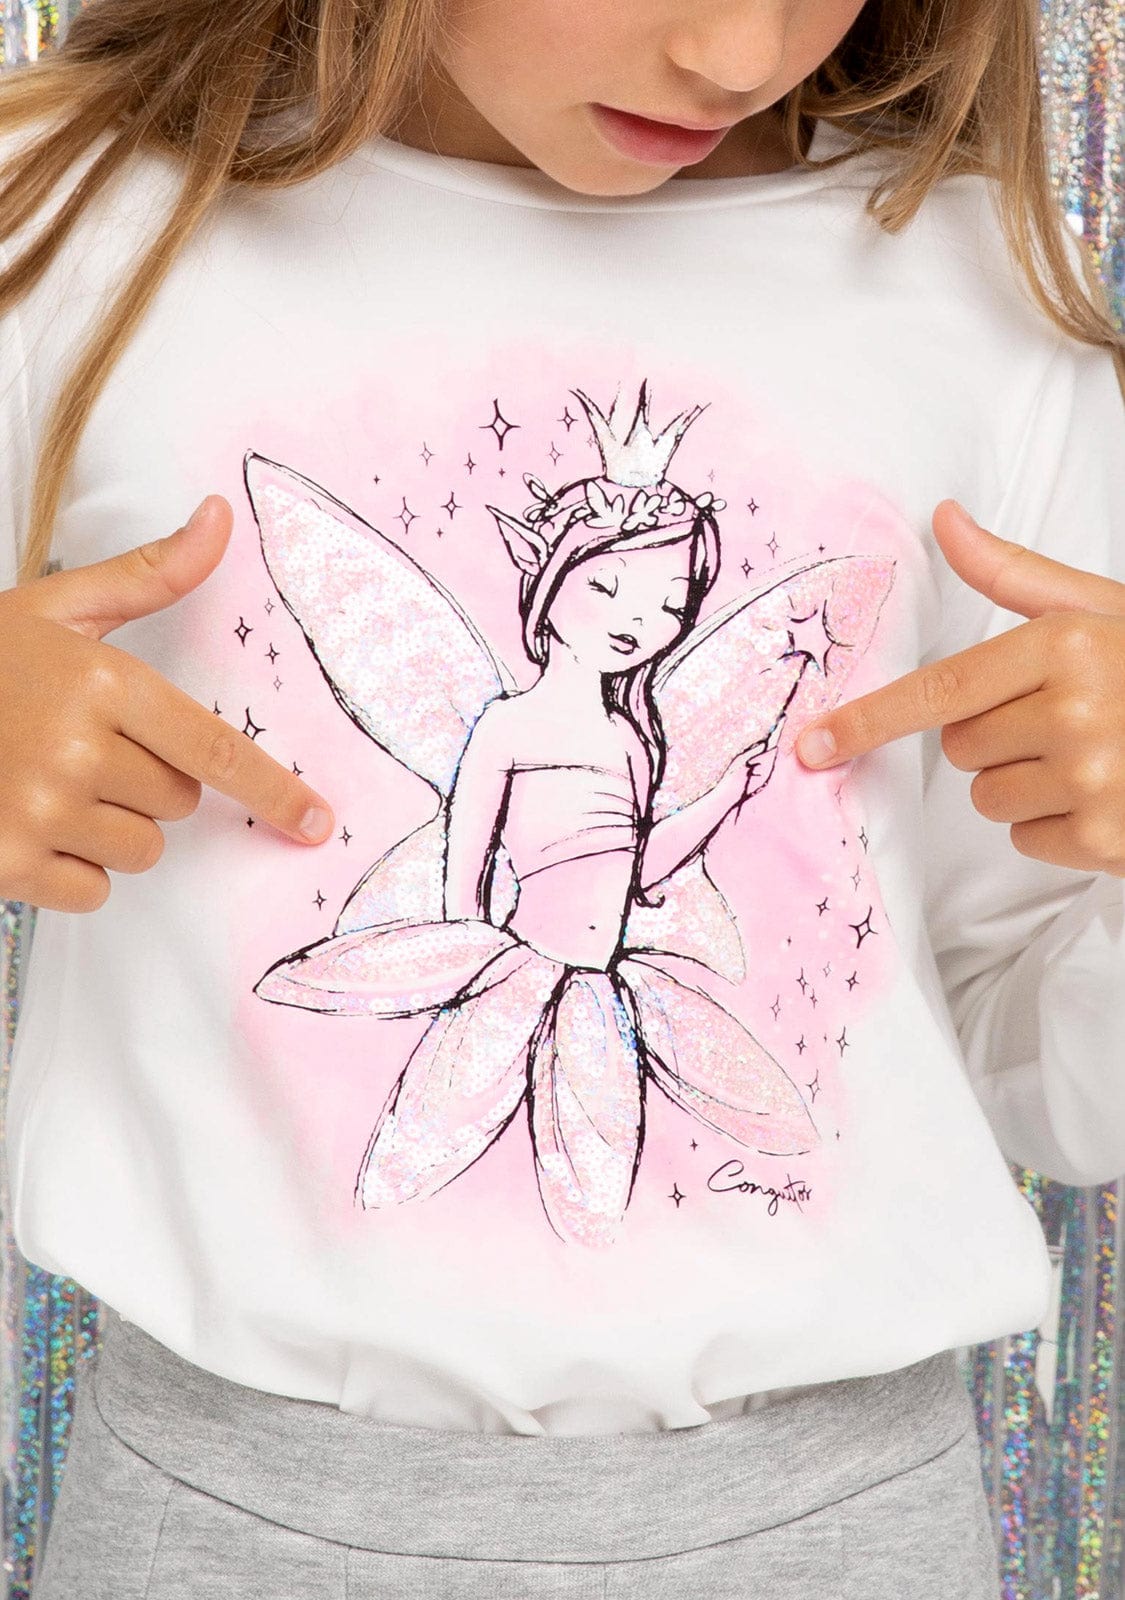 CONGUITOS TEXTIL Clothing Girl's White Magic Fairy T-Shirt